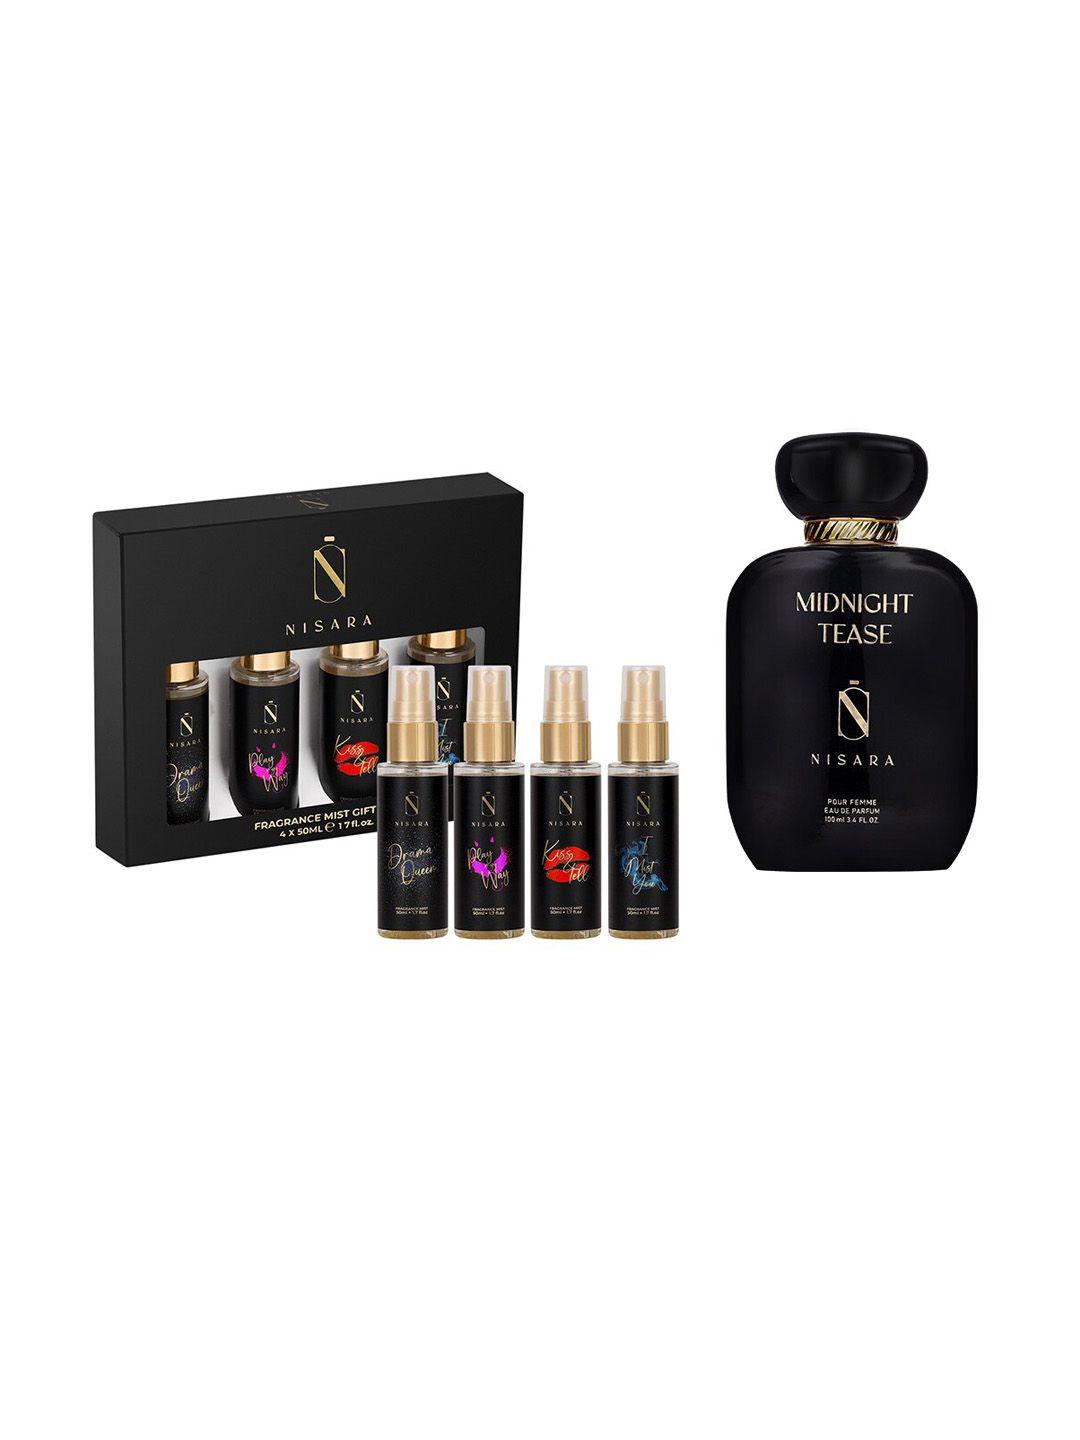 nisara midnight tease perfume & fragrance body mist gift set